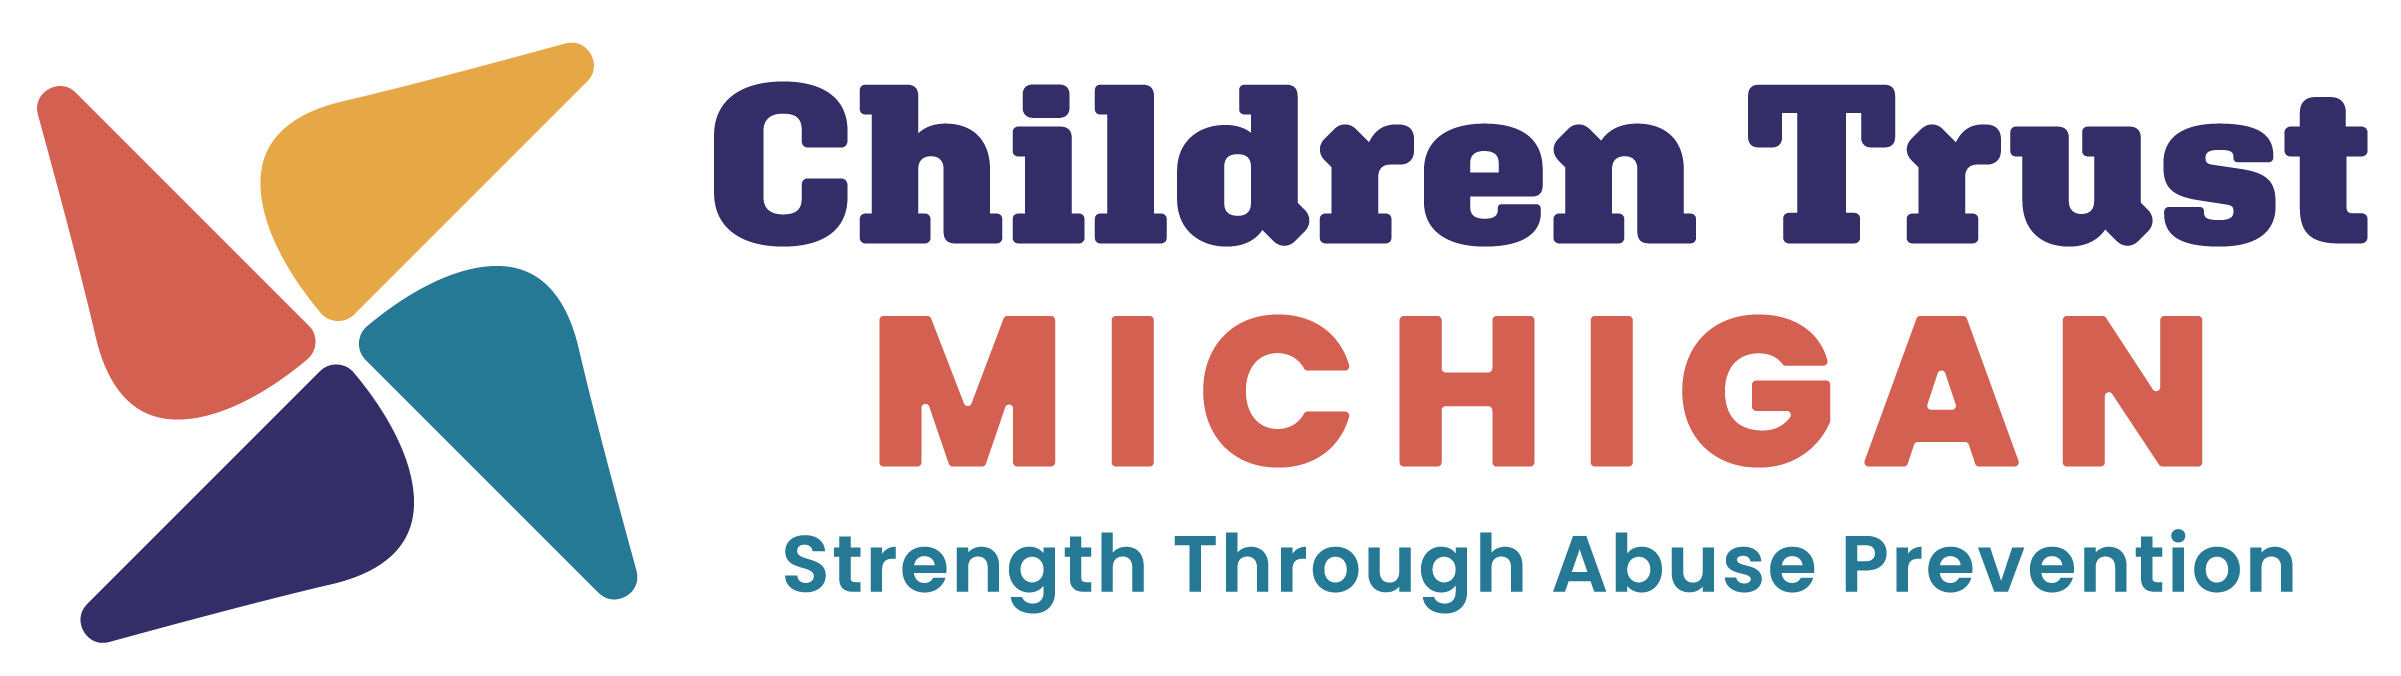 Children Trust Michigan